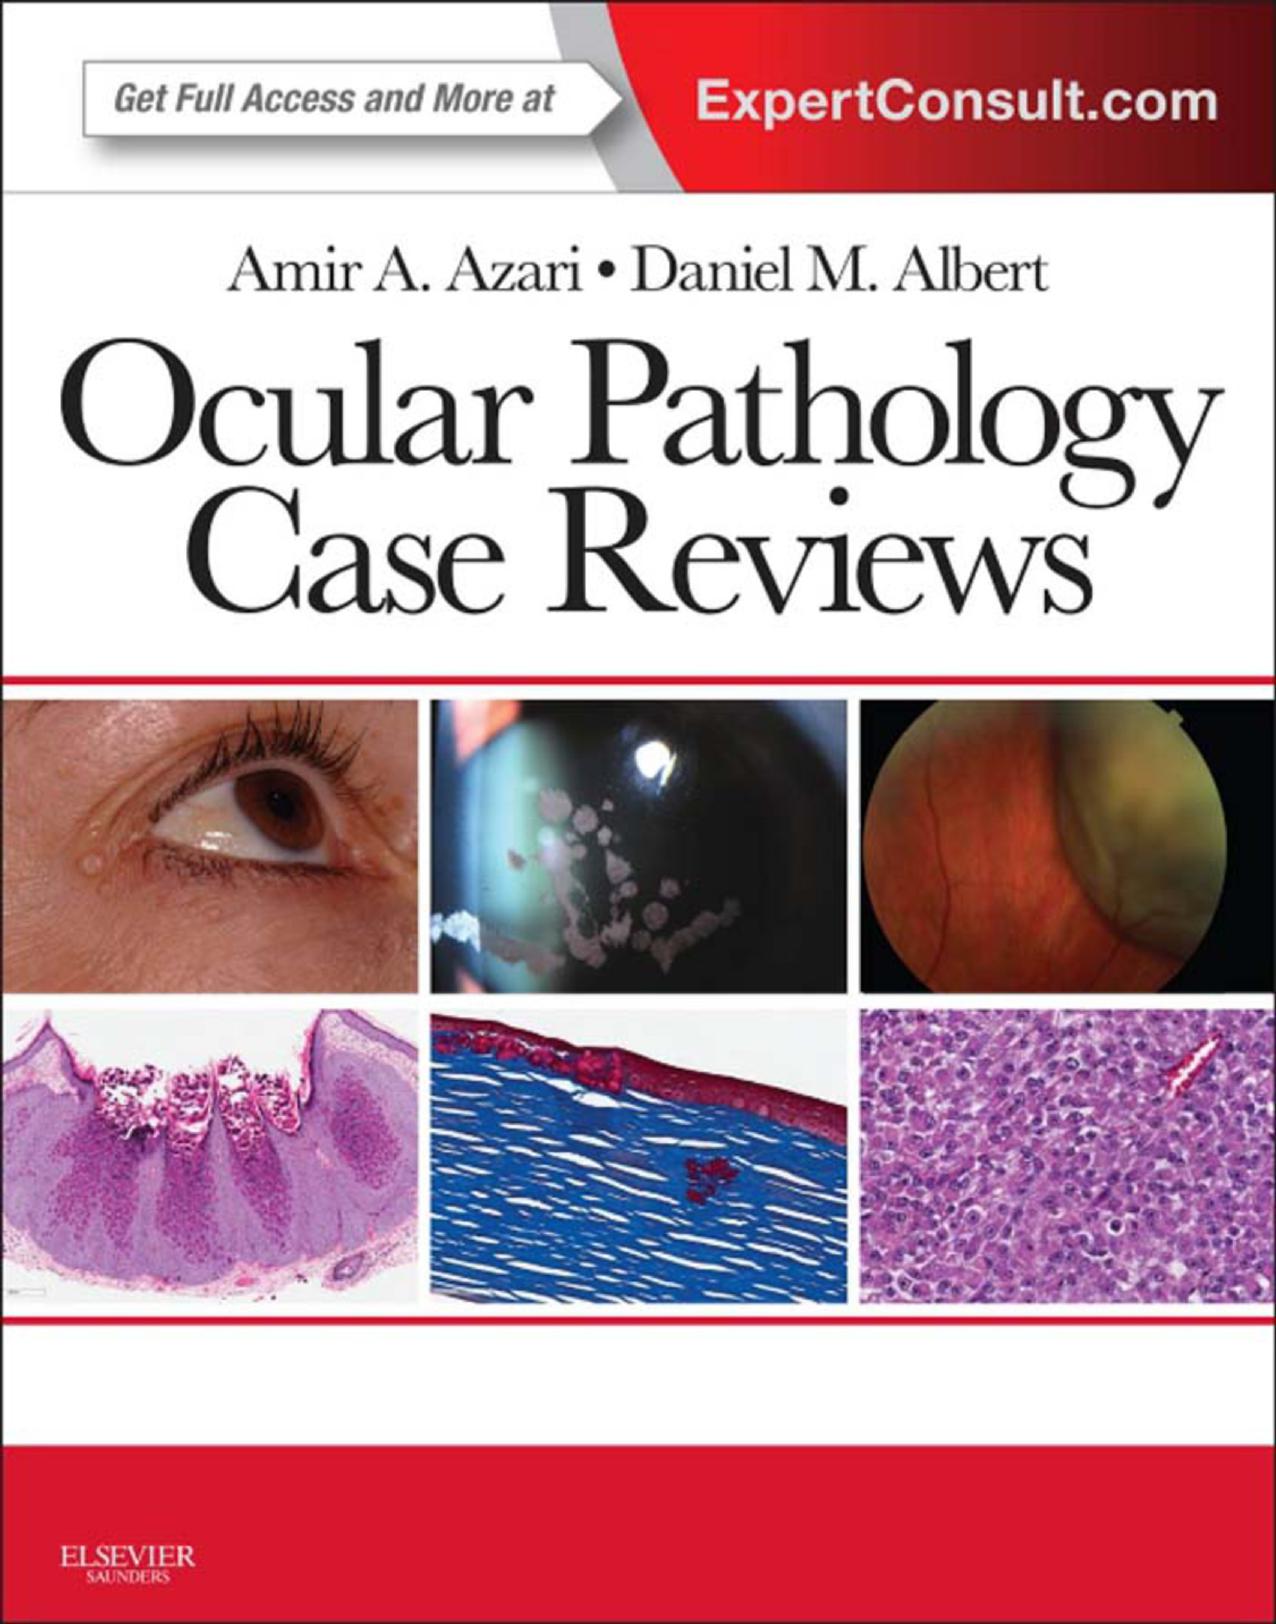 Ocular Pathology Case Reviews 1st Edition PDF